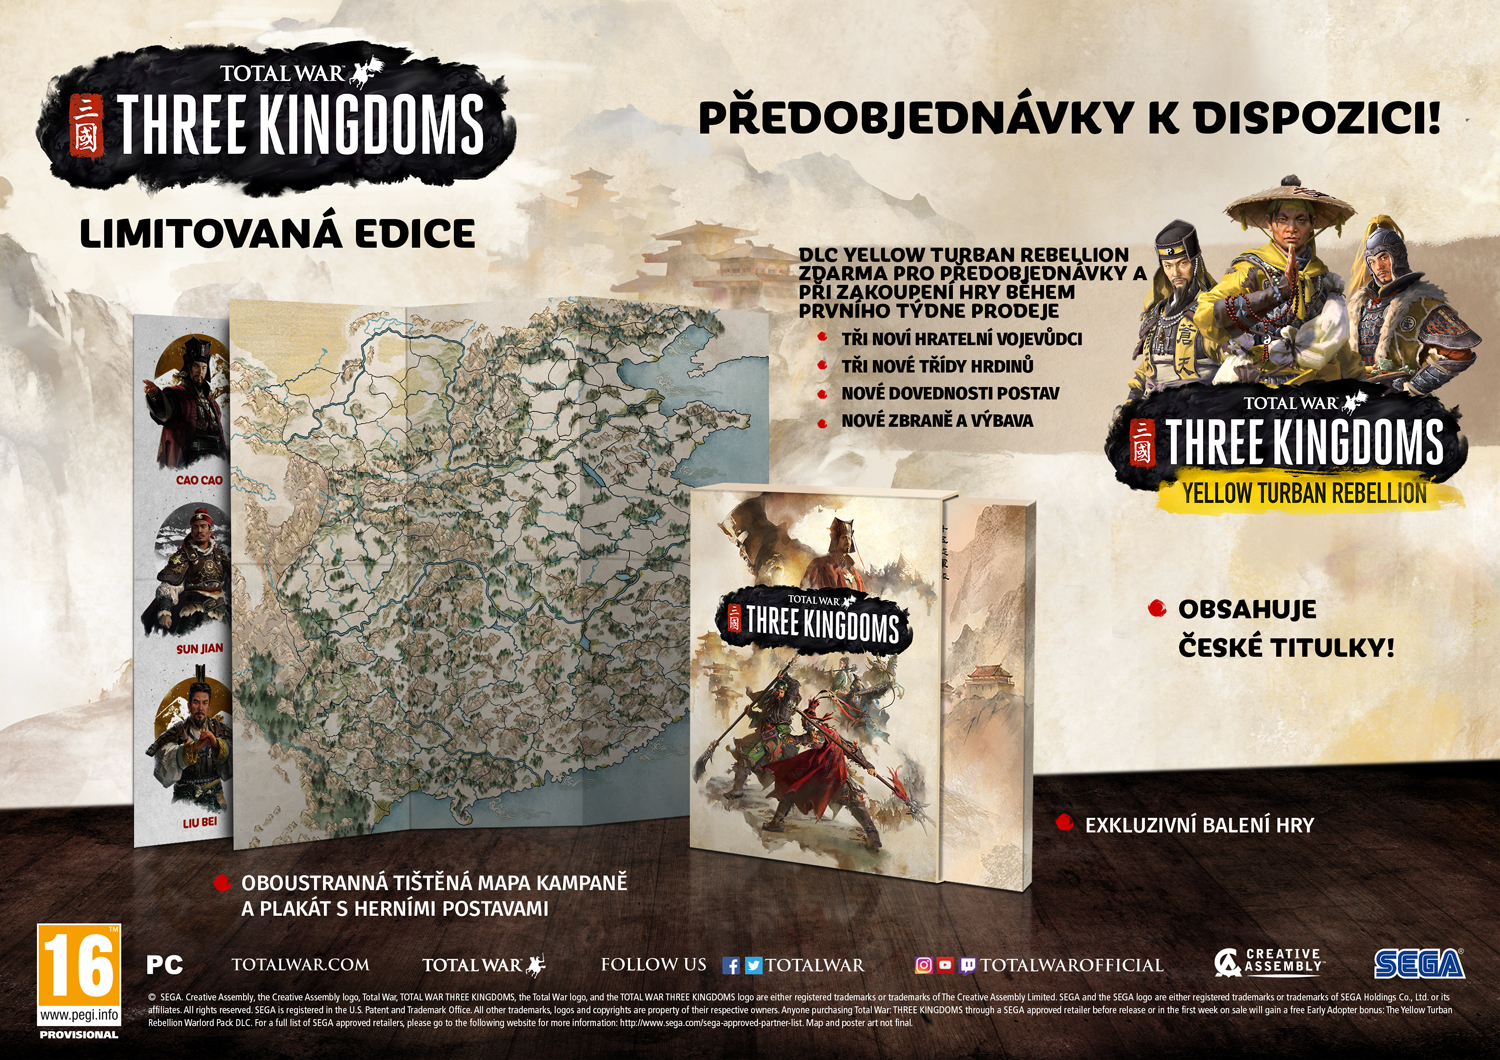 Představena limitovaná edice Total War: Three Kingdoms Limitovana edice Total War Three Kingdoms